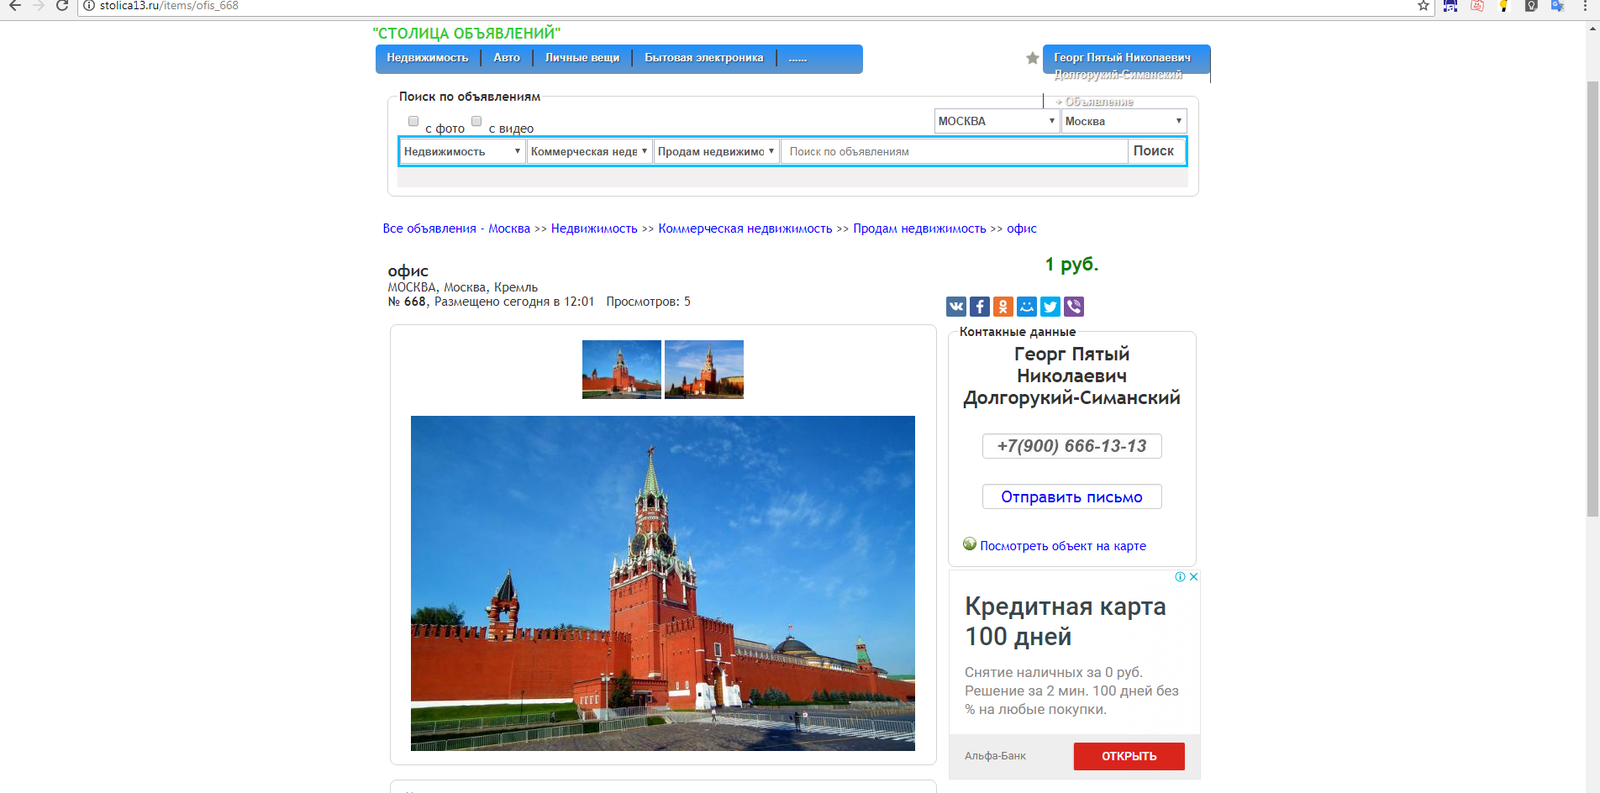 Not bad sell Kremlin / sell the Kremlin here (you must take - , , Kremlinru, Kremlin